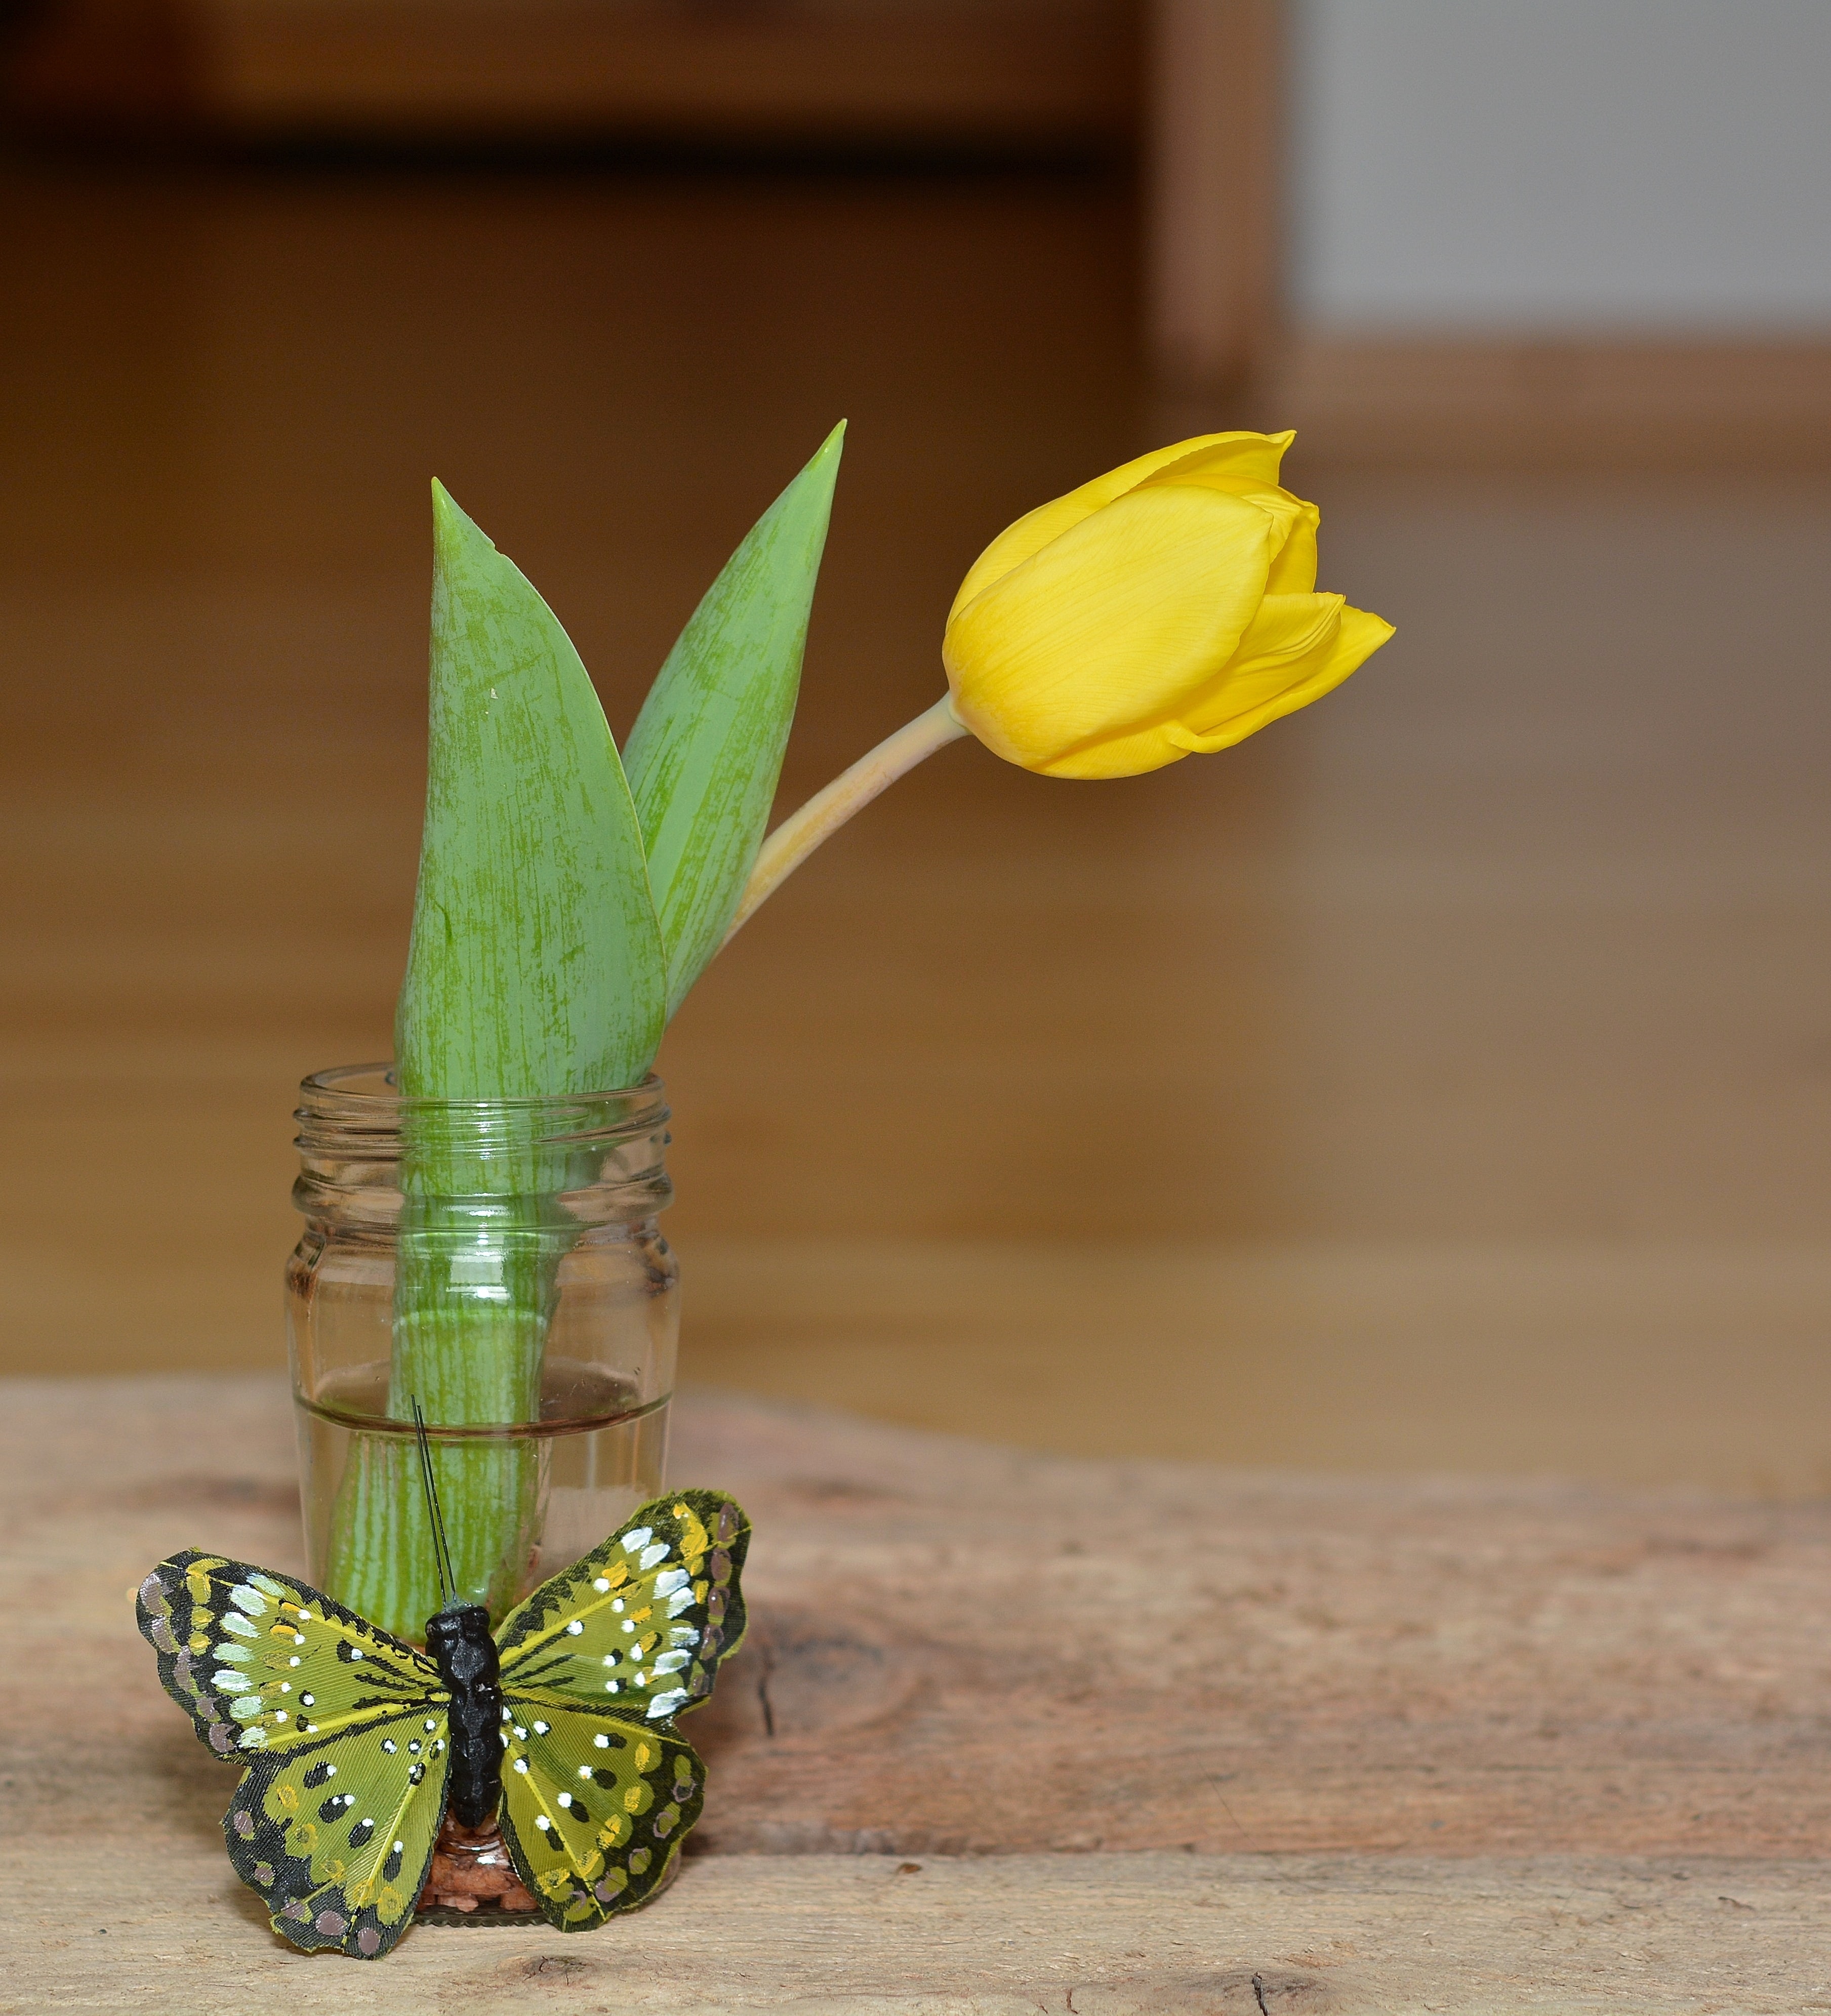 Vase, Flower, Tulip, Yellow Flower, wood - material, leaf